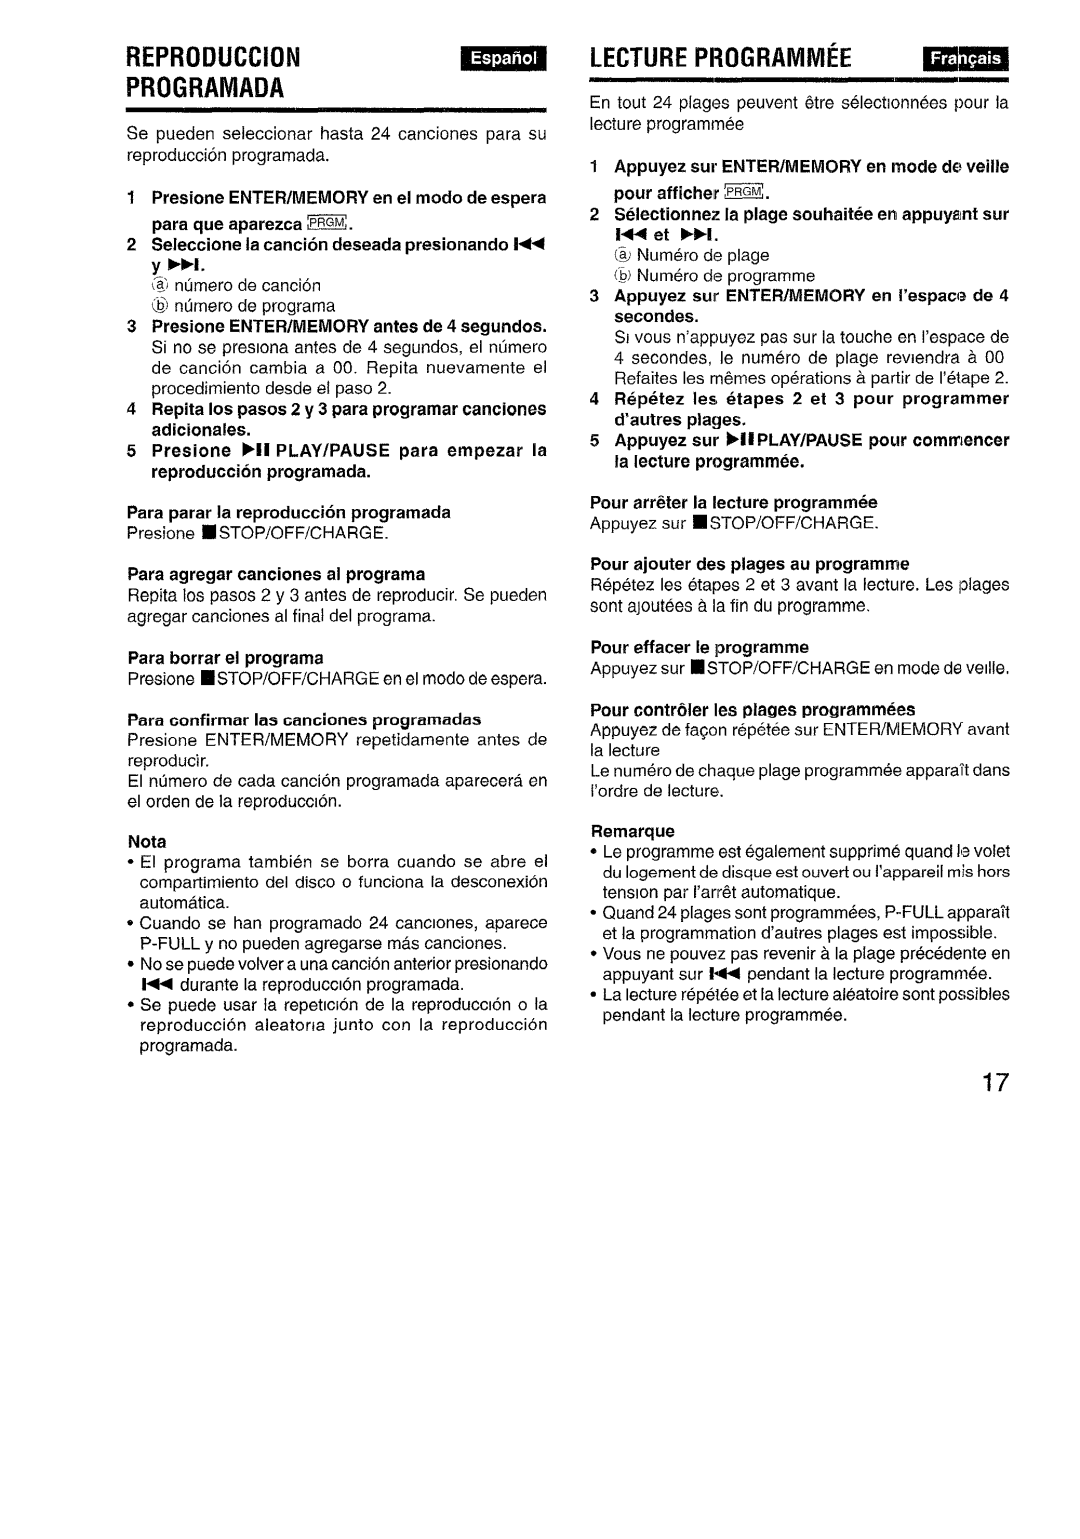 Aiwa XP-R970 manual REPRODUCTIONmm PROGRAMADA, LECTURE PROGRAMMfE 